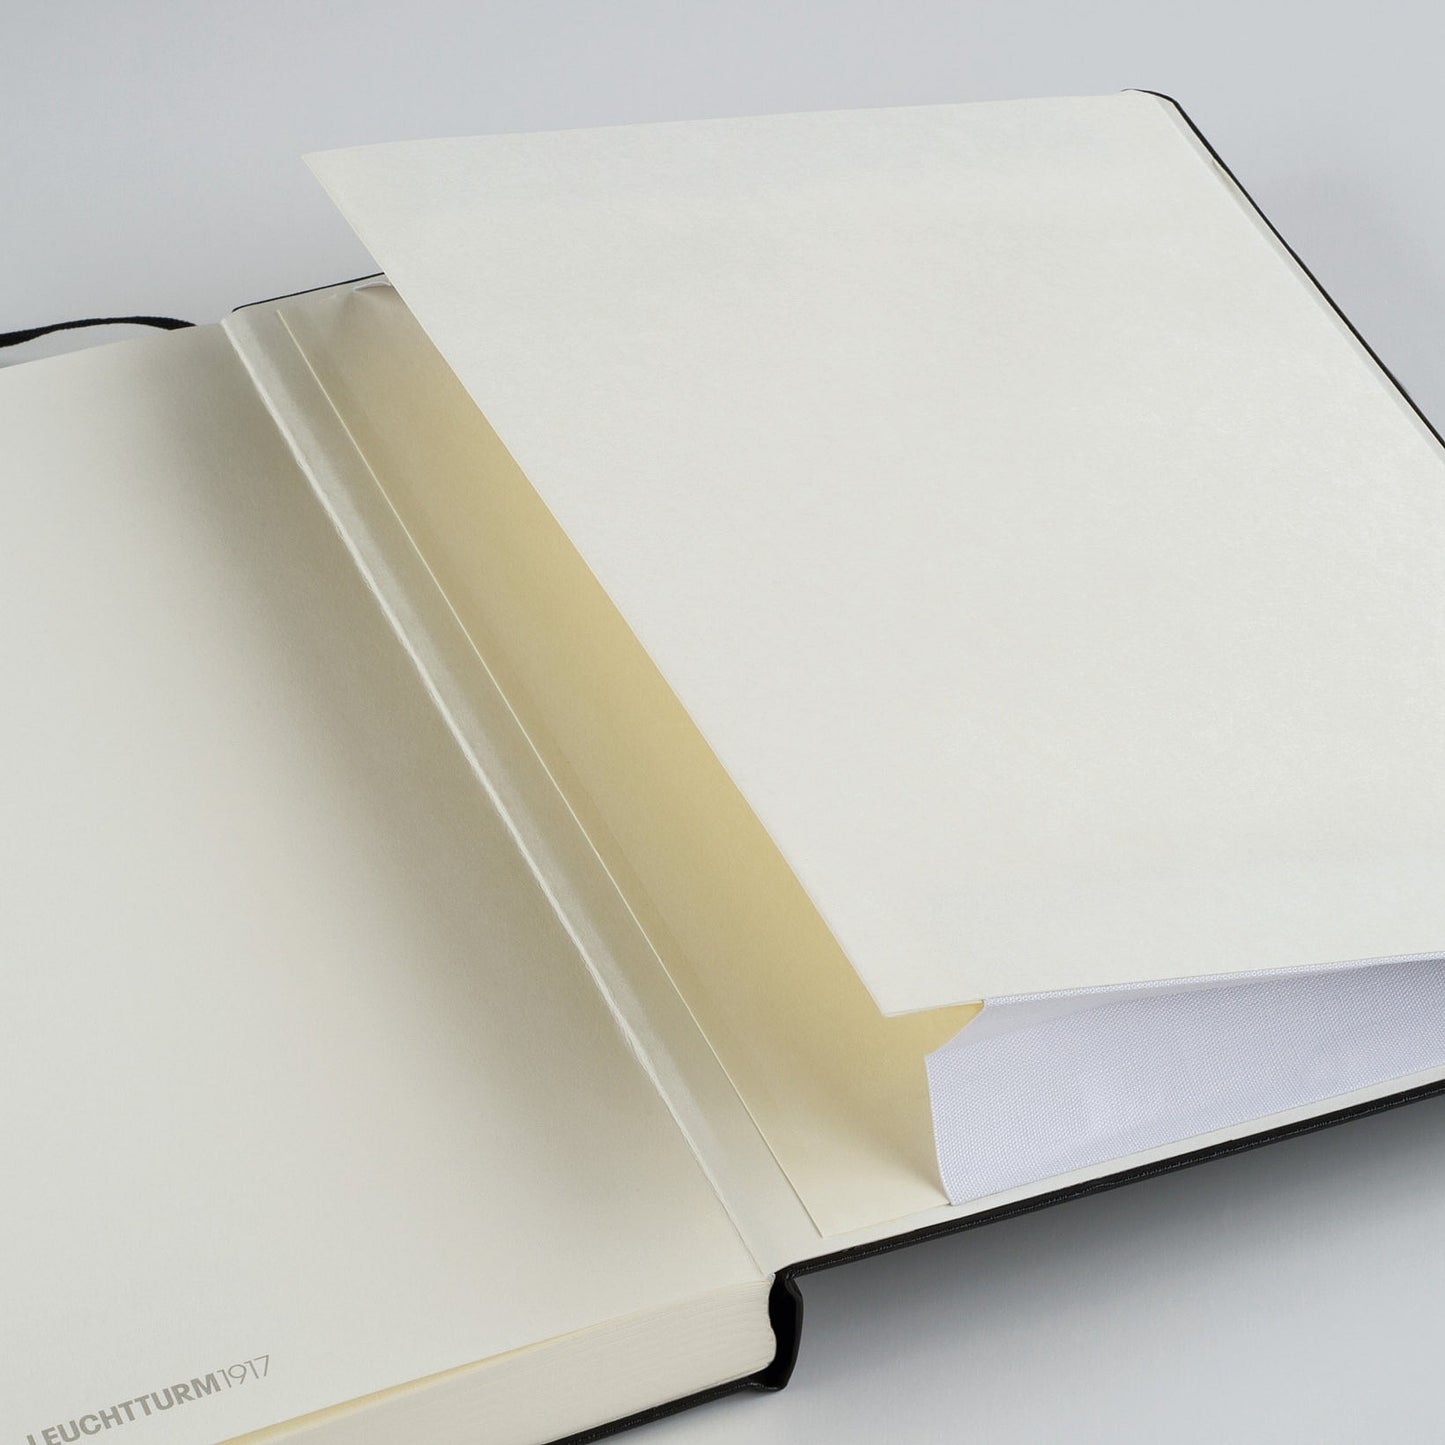 Leuchtturm1917 A5 Medium Hardcover Notebook - Stone Blue / Ruled